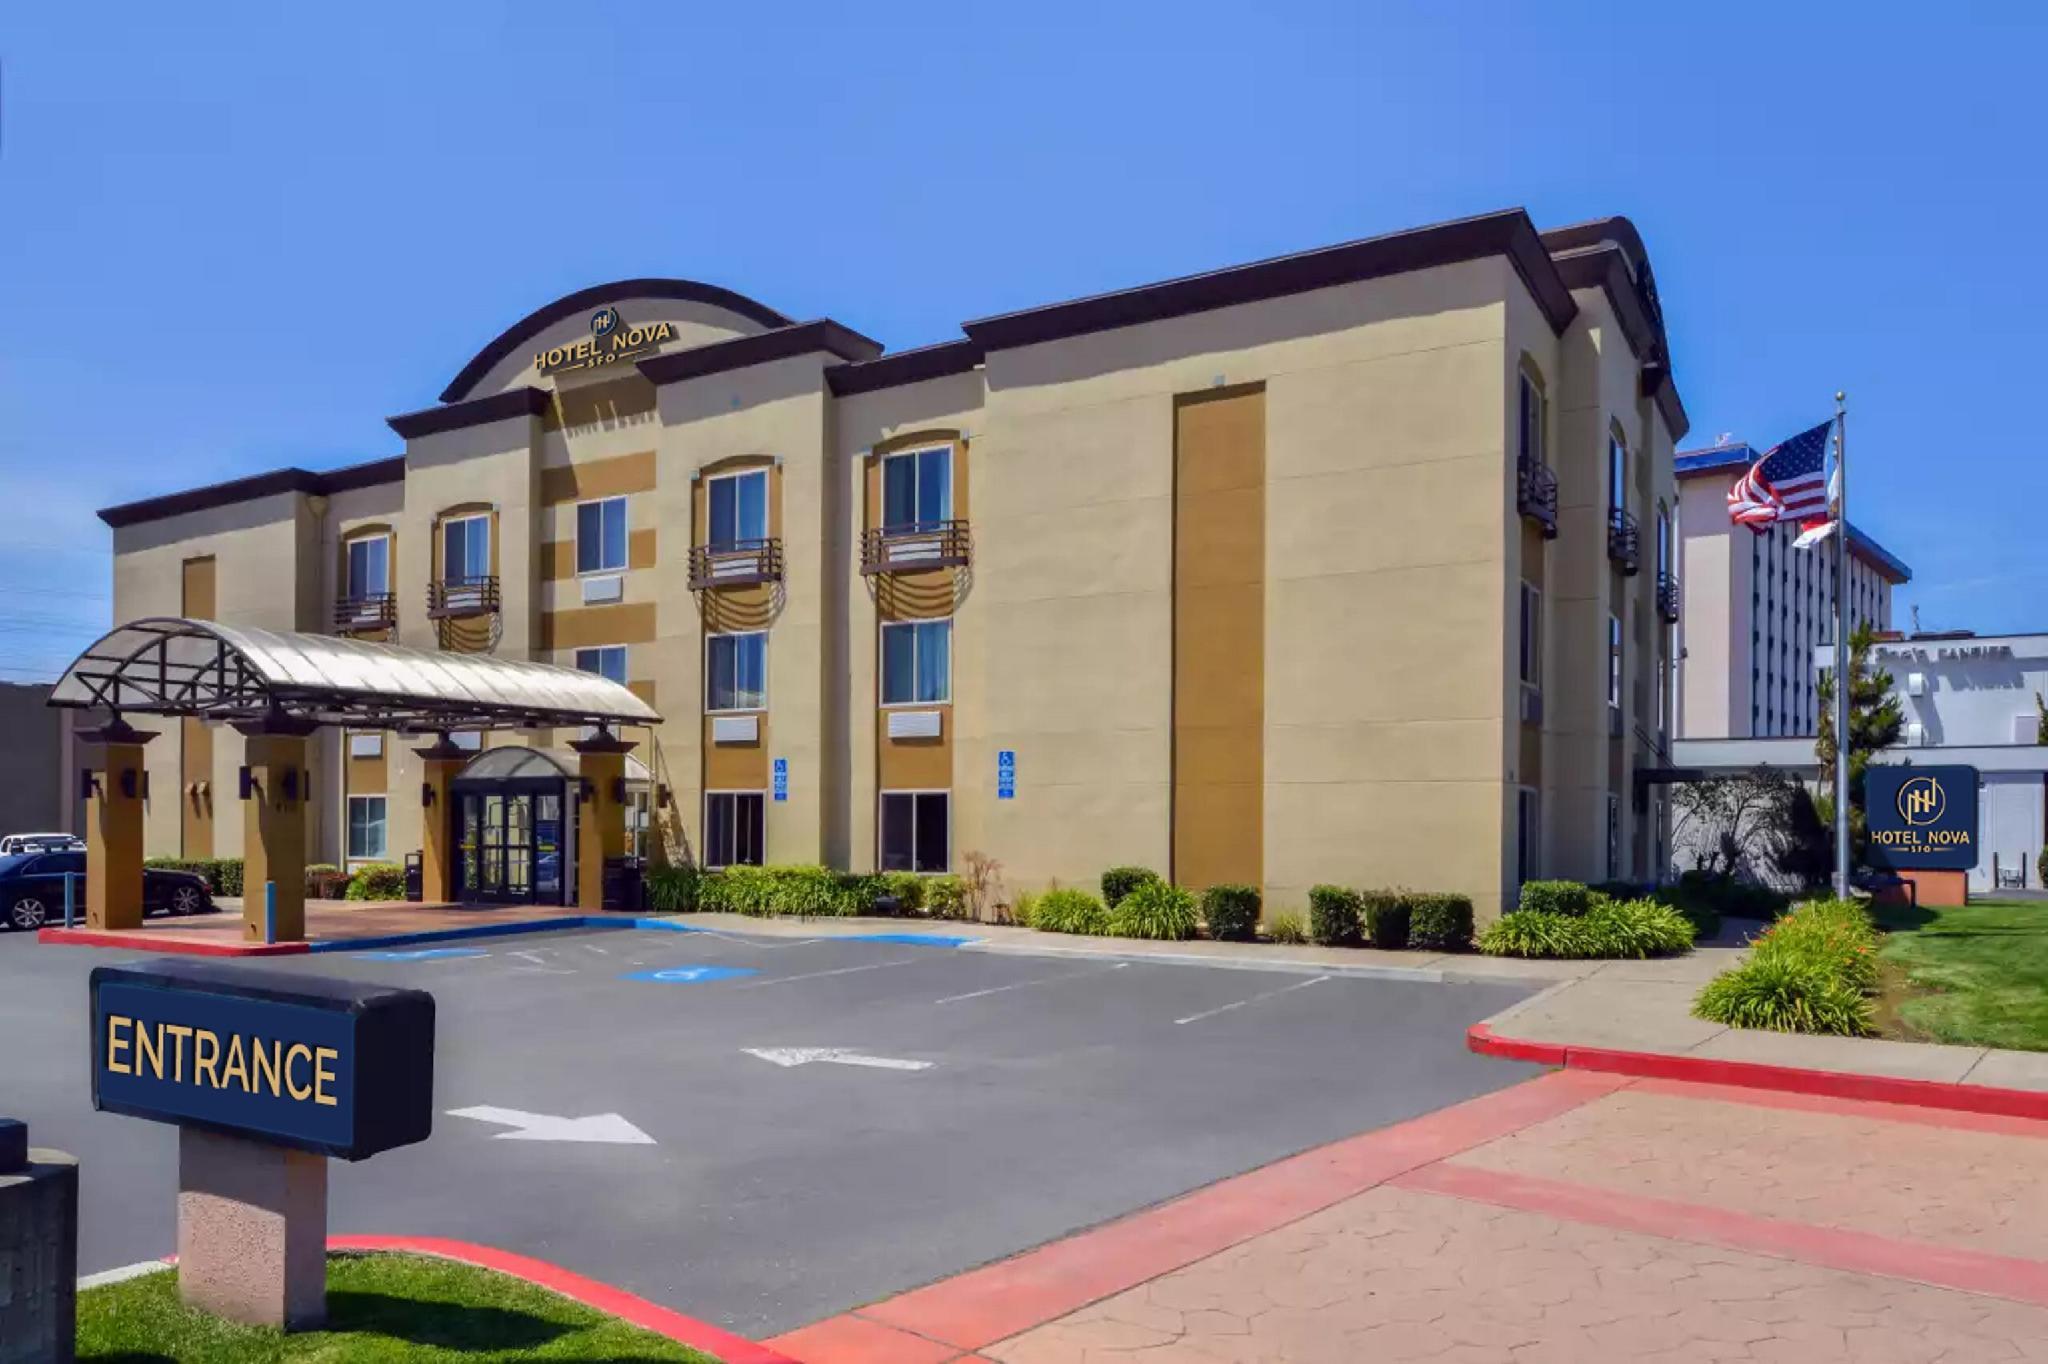 Hotel Nova Sfo - A Fairbridge Hotel - Daly City, CA